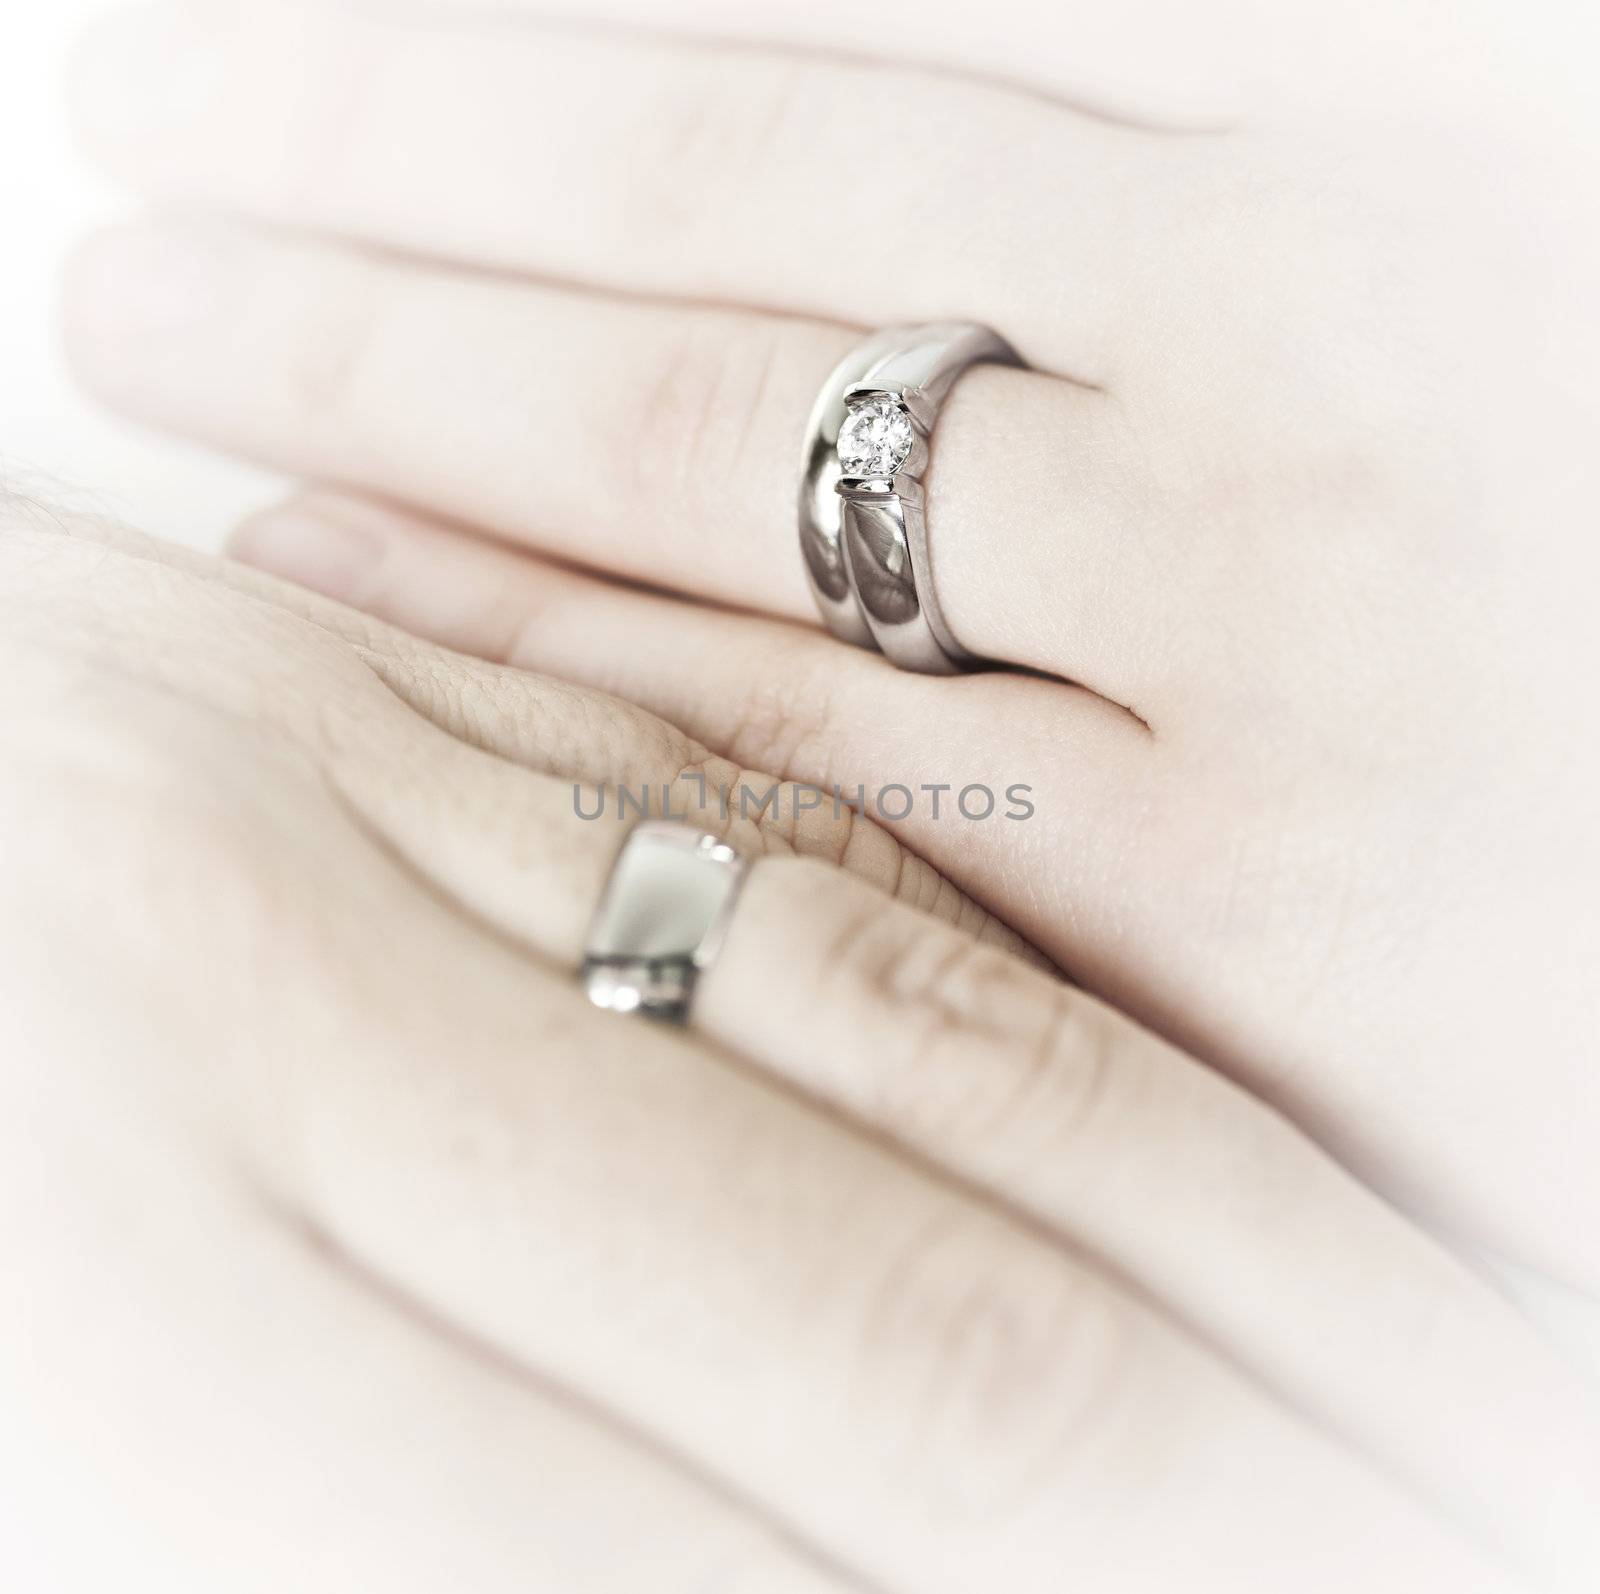 Hands wearing wedding rings by elenathewise